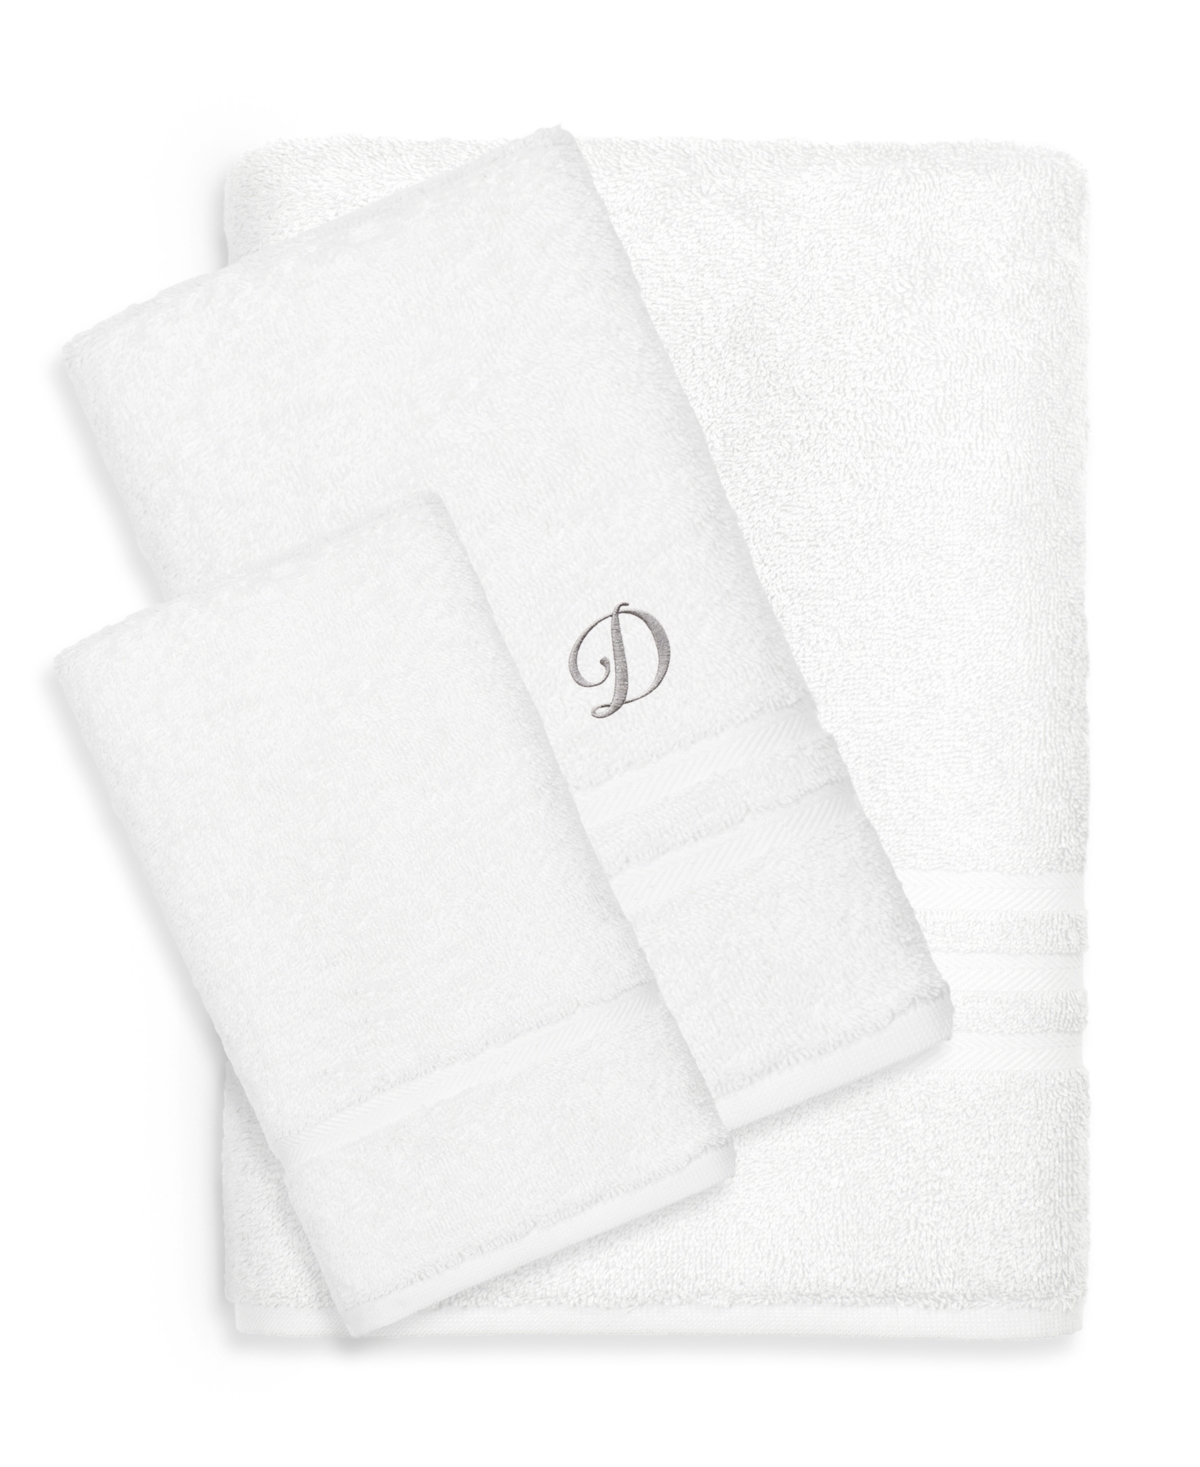 Linum Home Textiles Turkish Cotton Personalized Denzi Towel Set, 3 Piece In White